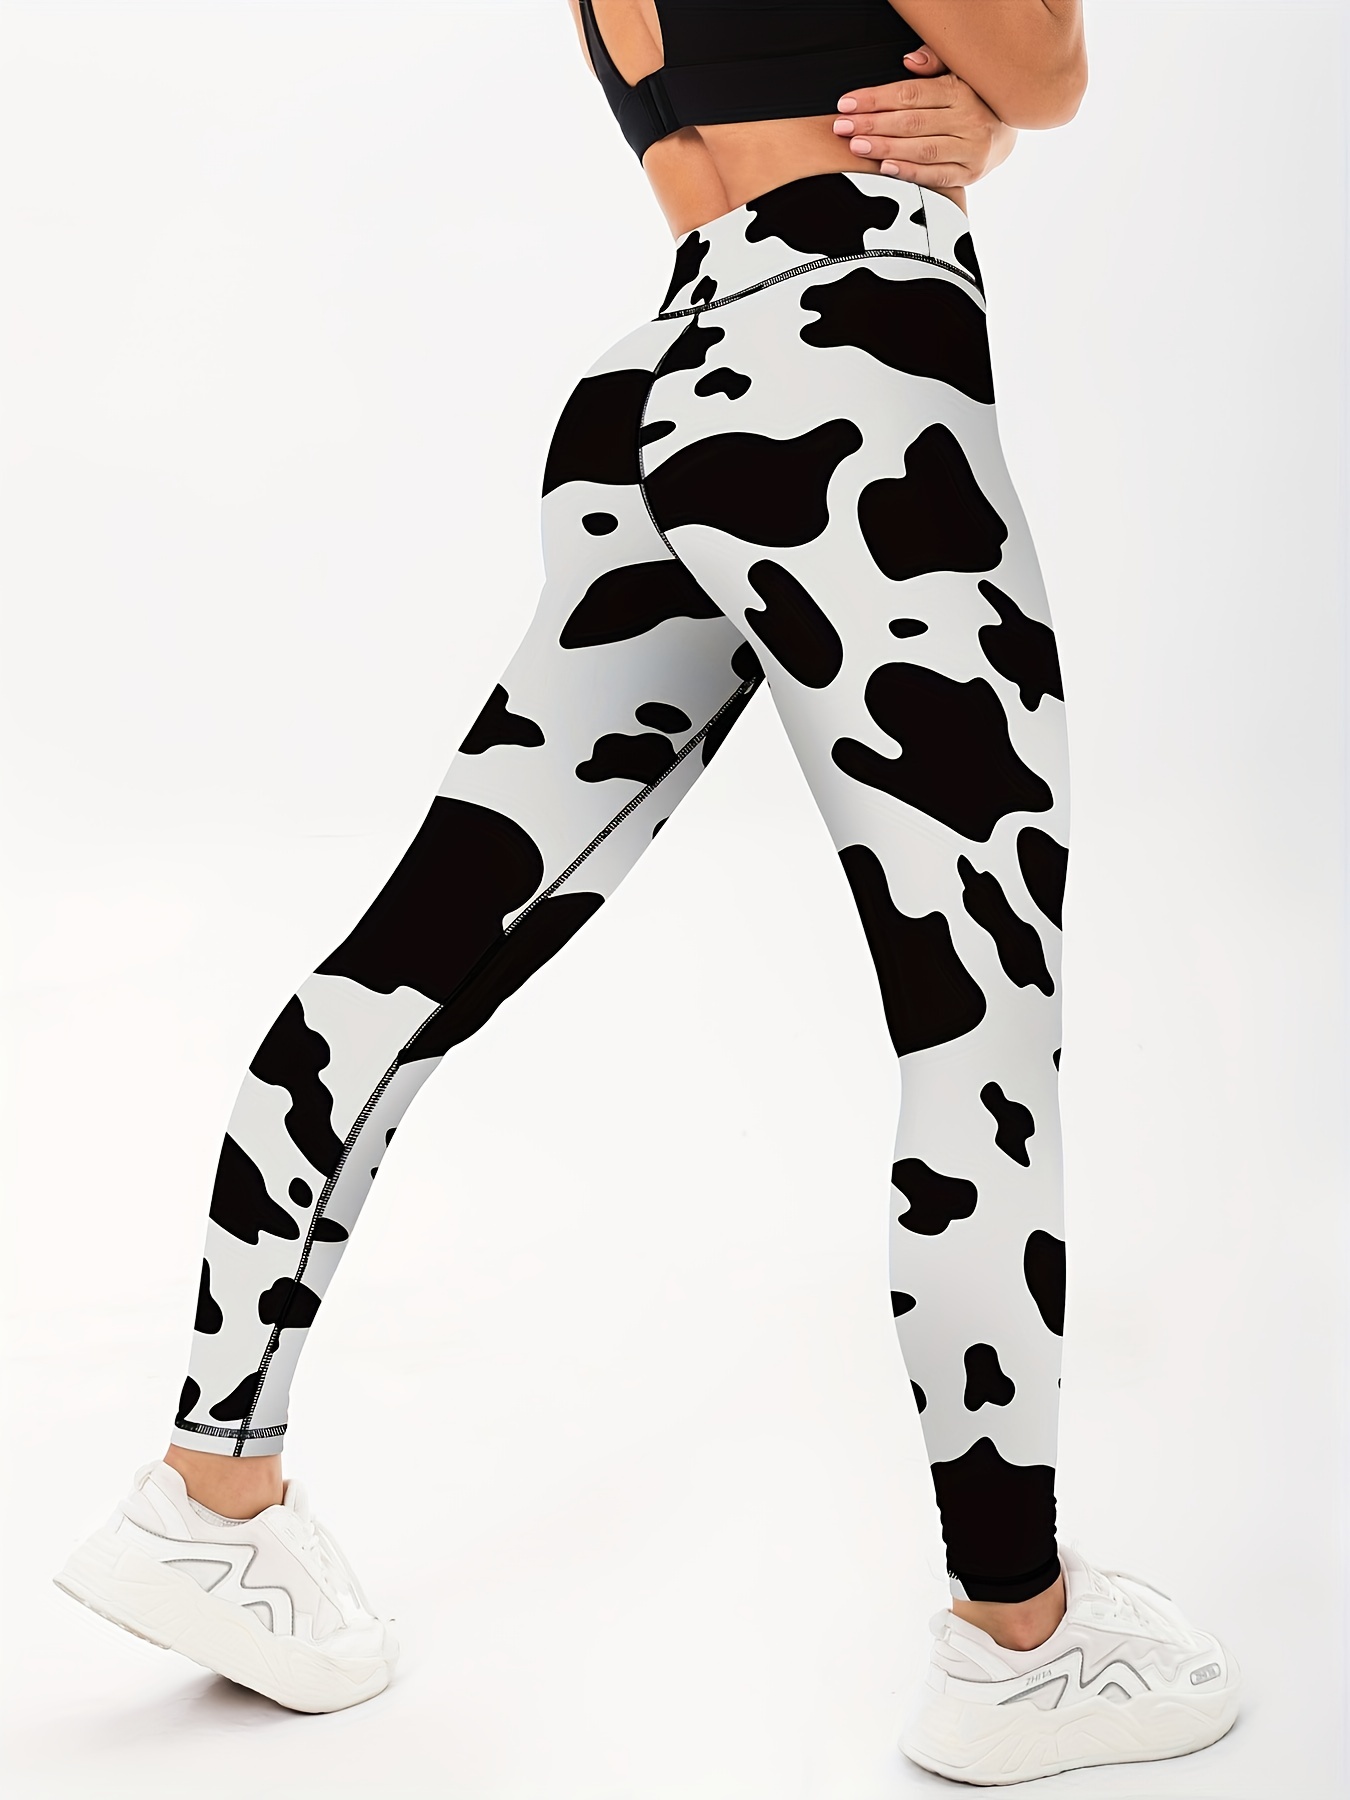 Cow Print Leggings, Cow Skin Yoga Pants, Cow Leggings, Printed